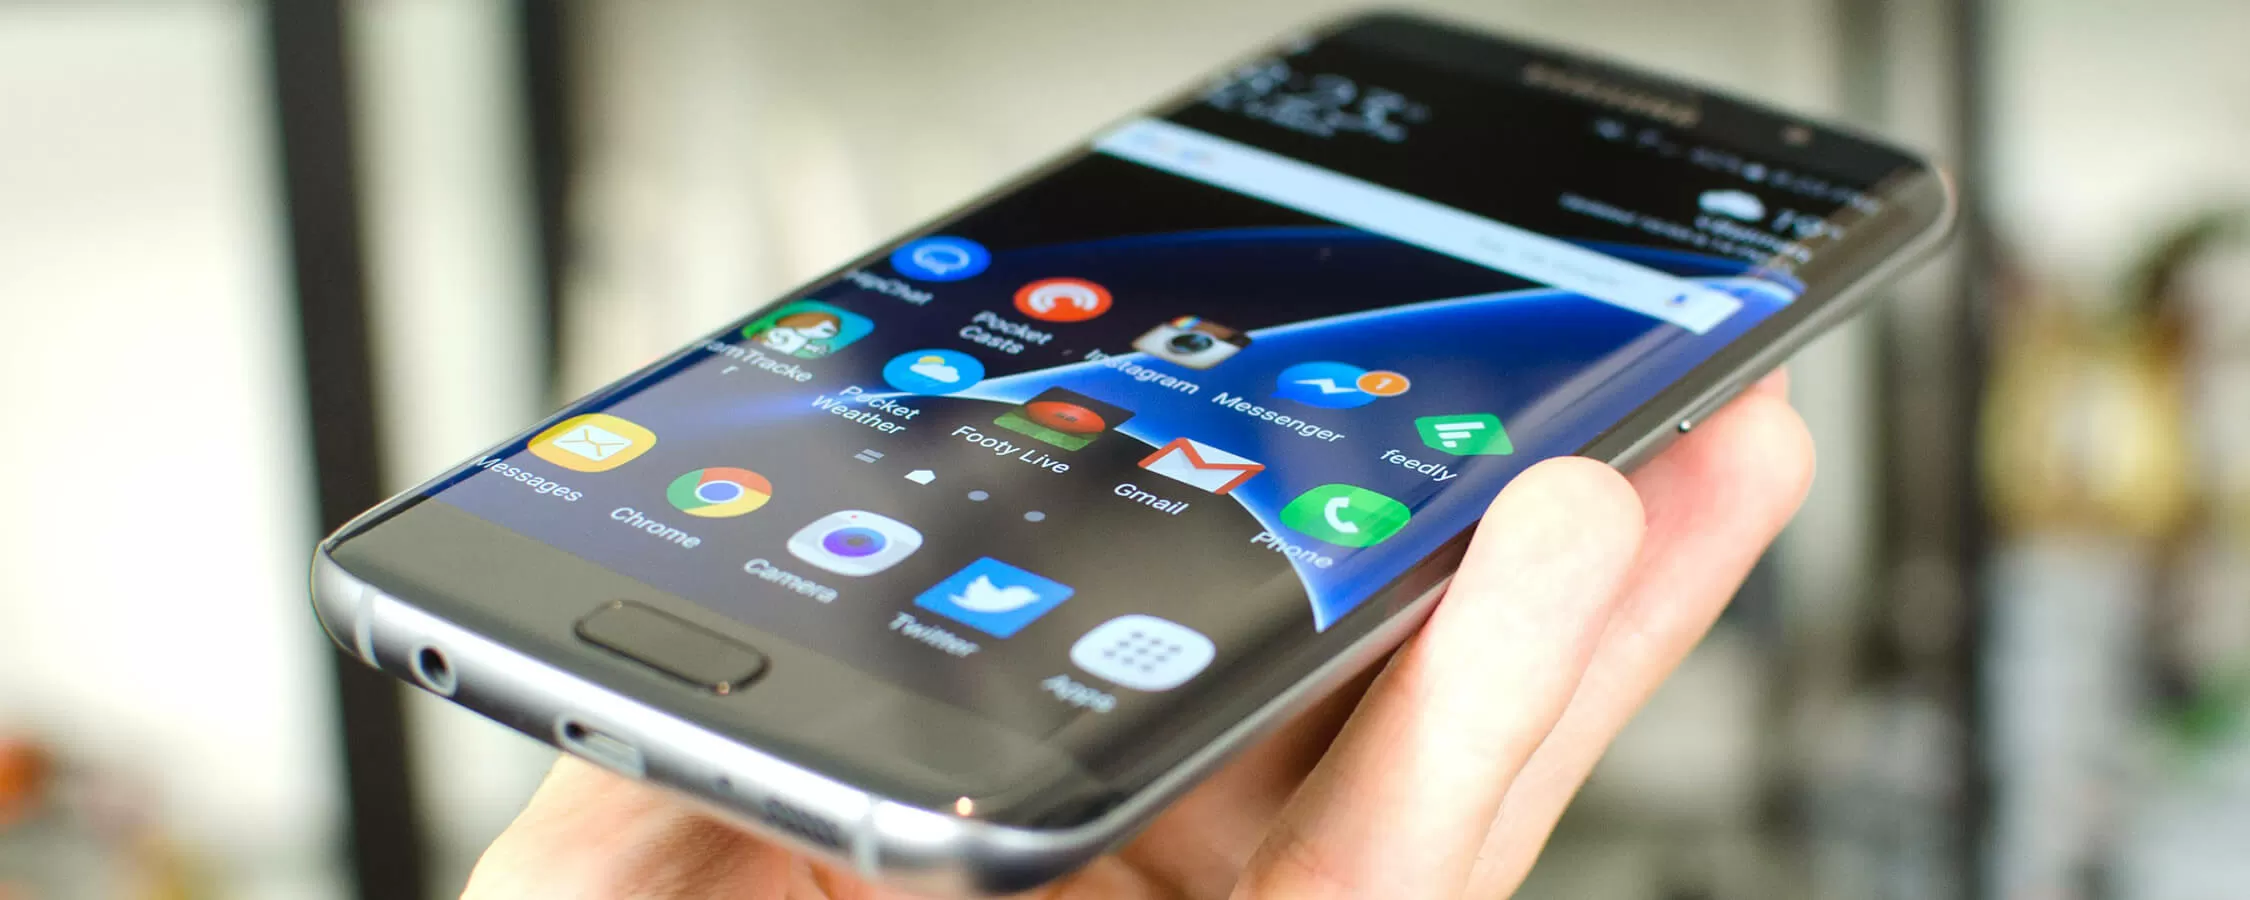 Samsung Galaxy S7 Edge Review | TechSpot